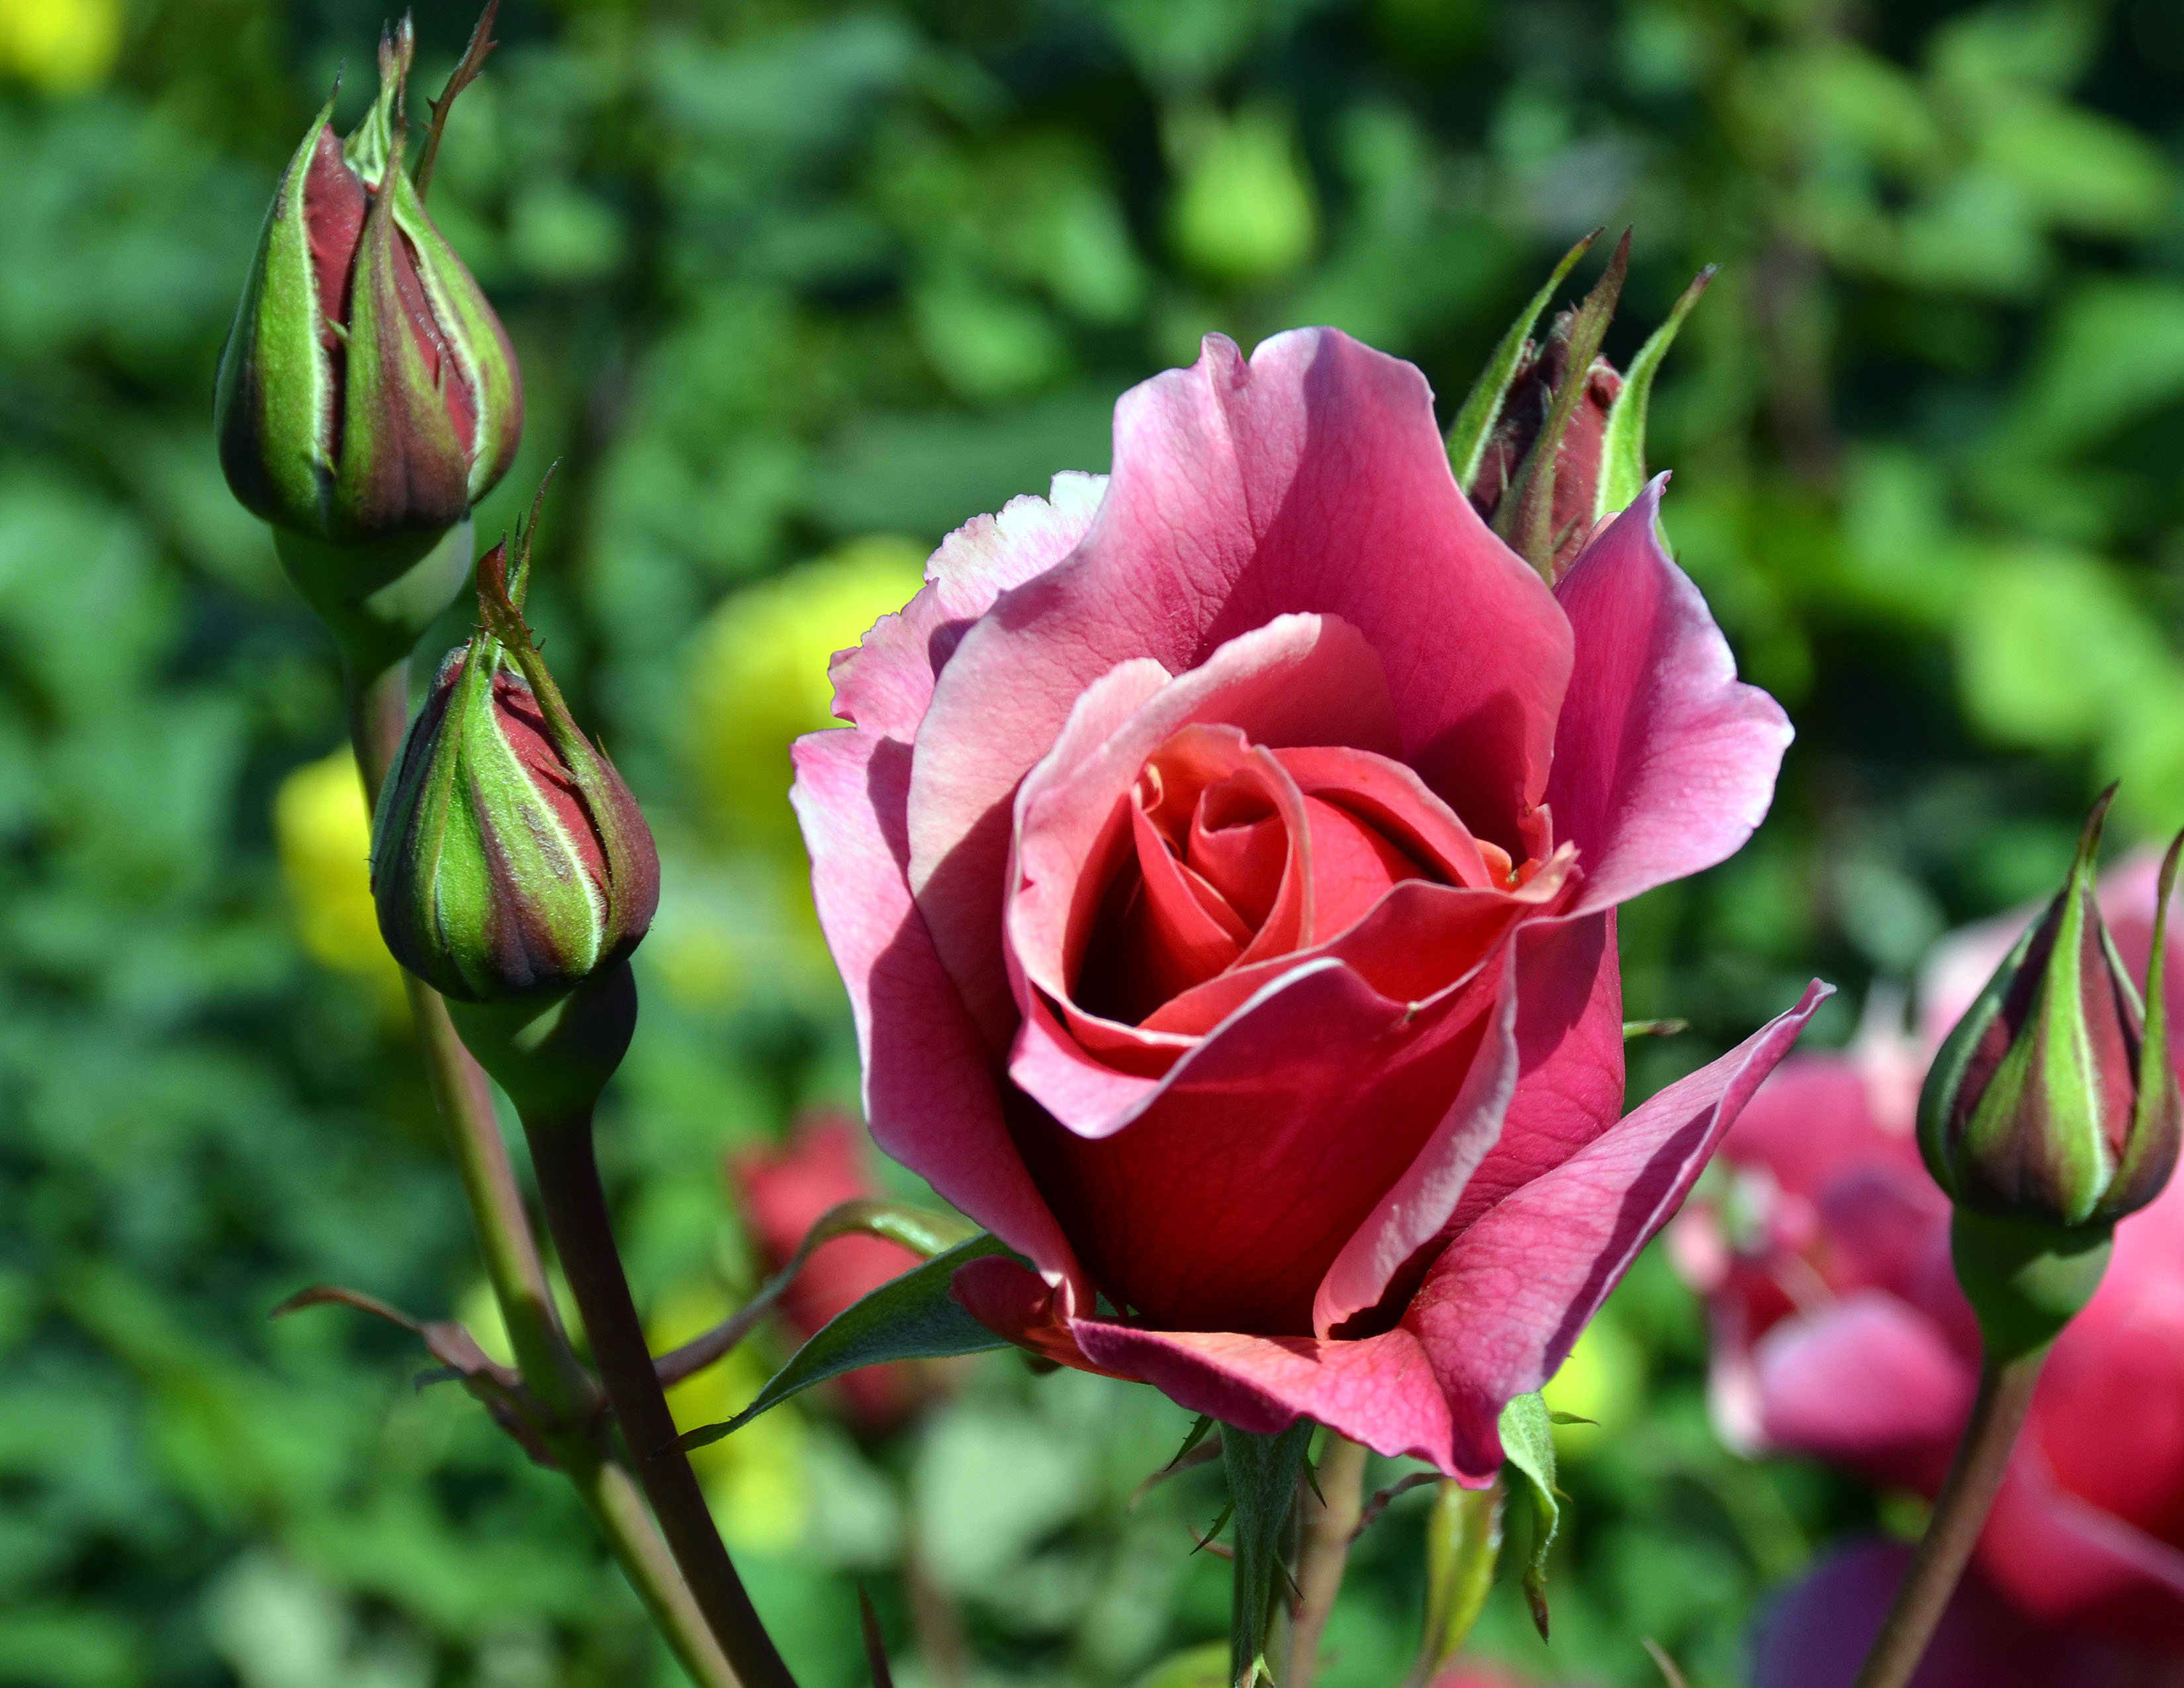 rose bud öâåò Rosebud morningdew - Oxilo